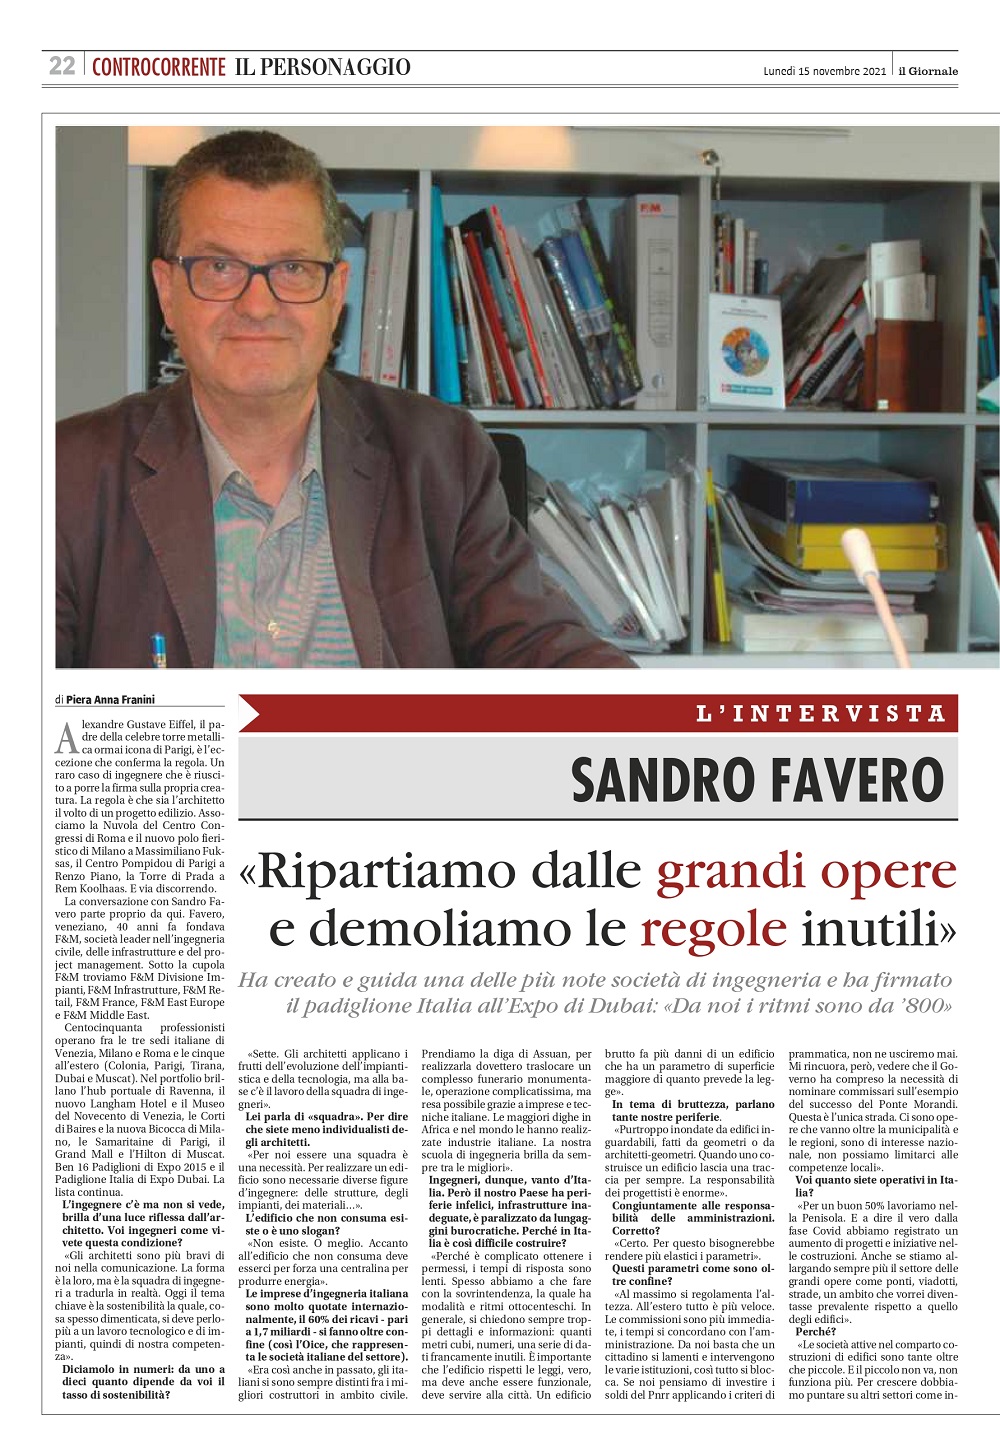 Sandro Favero